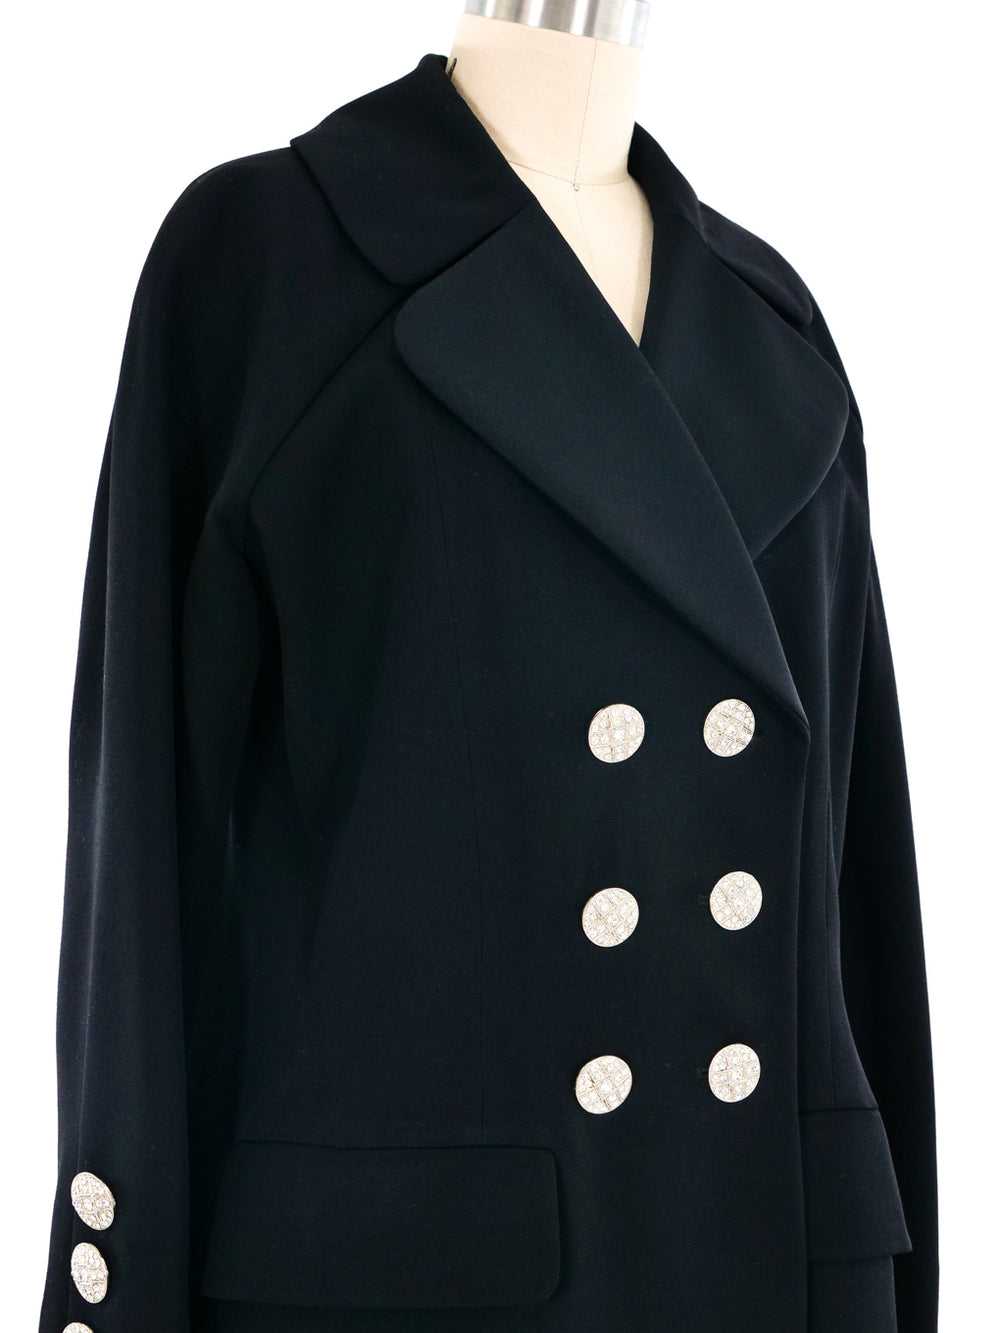 Yves Saint Laurent Wool Evening Jacket - image 2